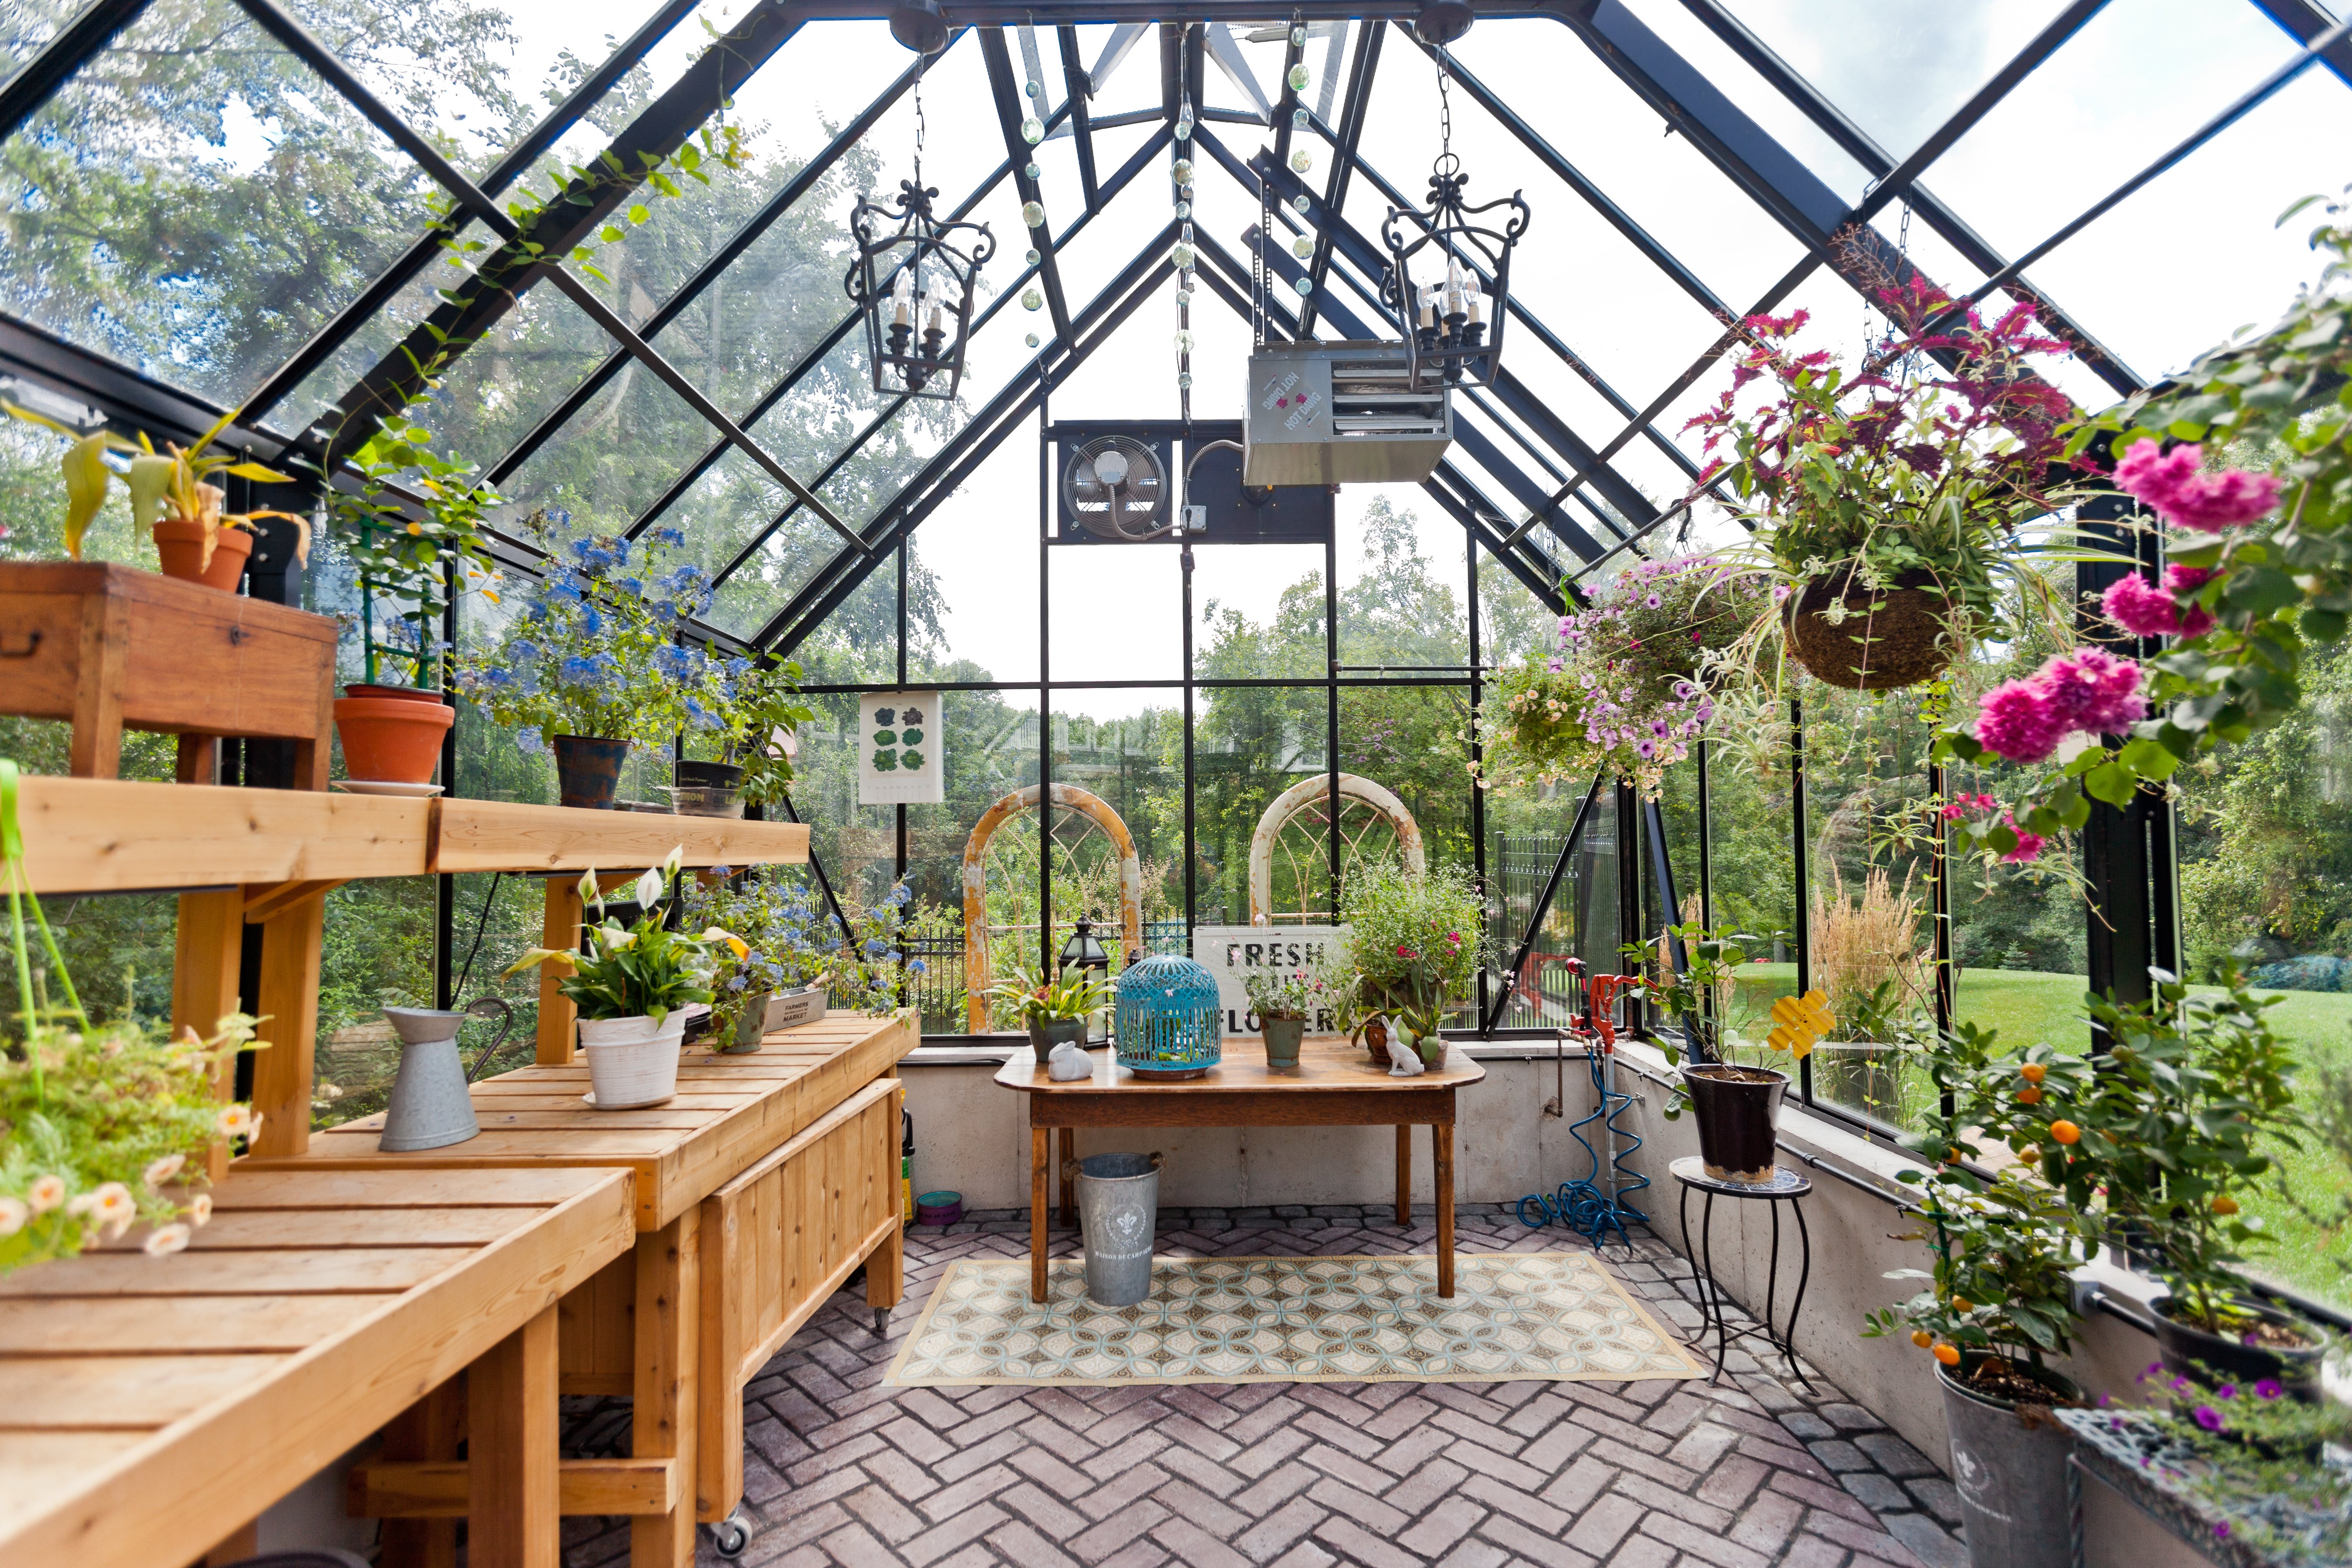 Greenhouse gardening: